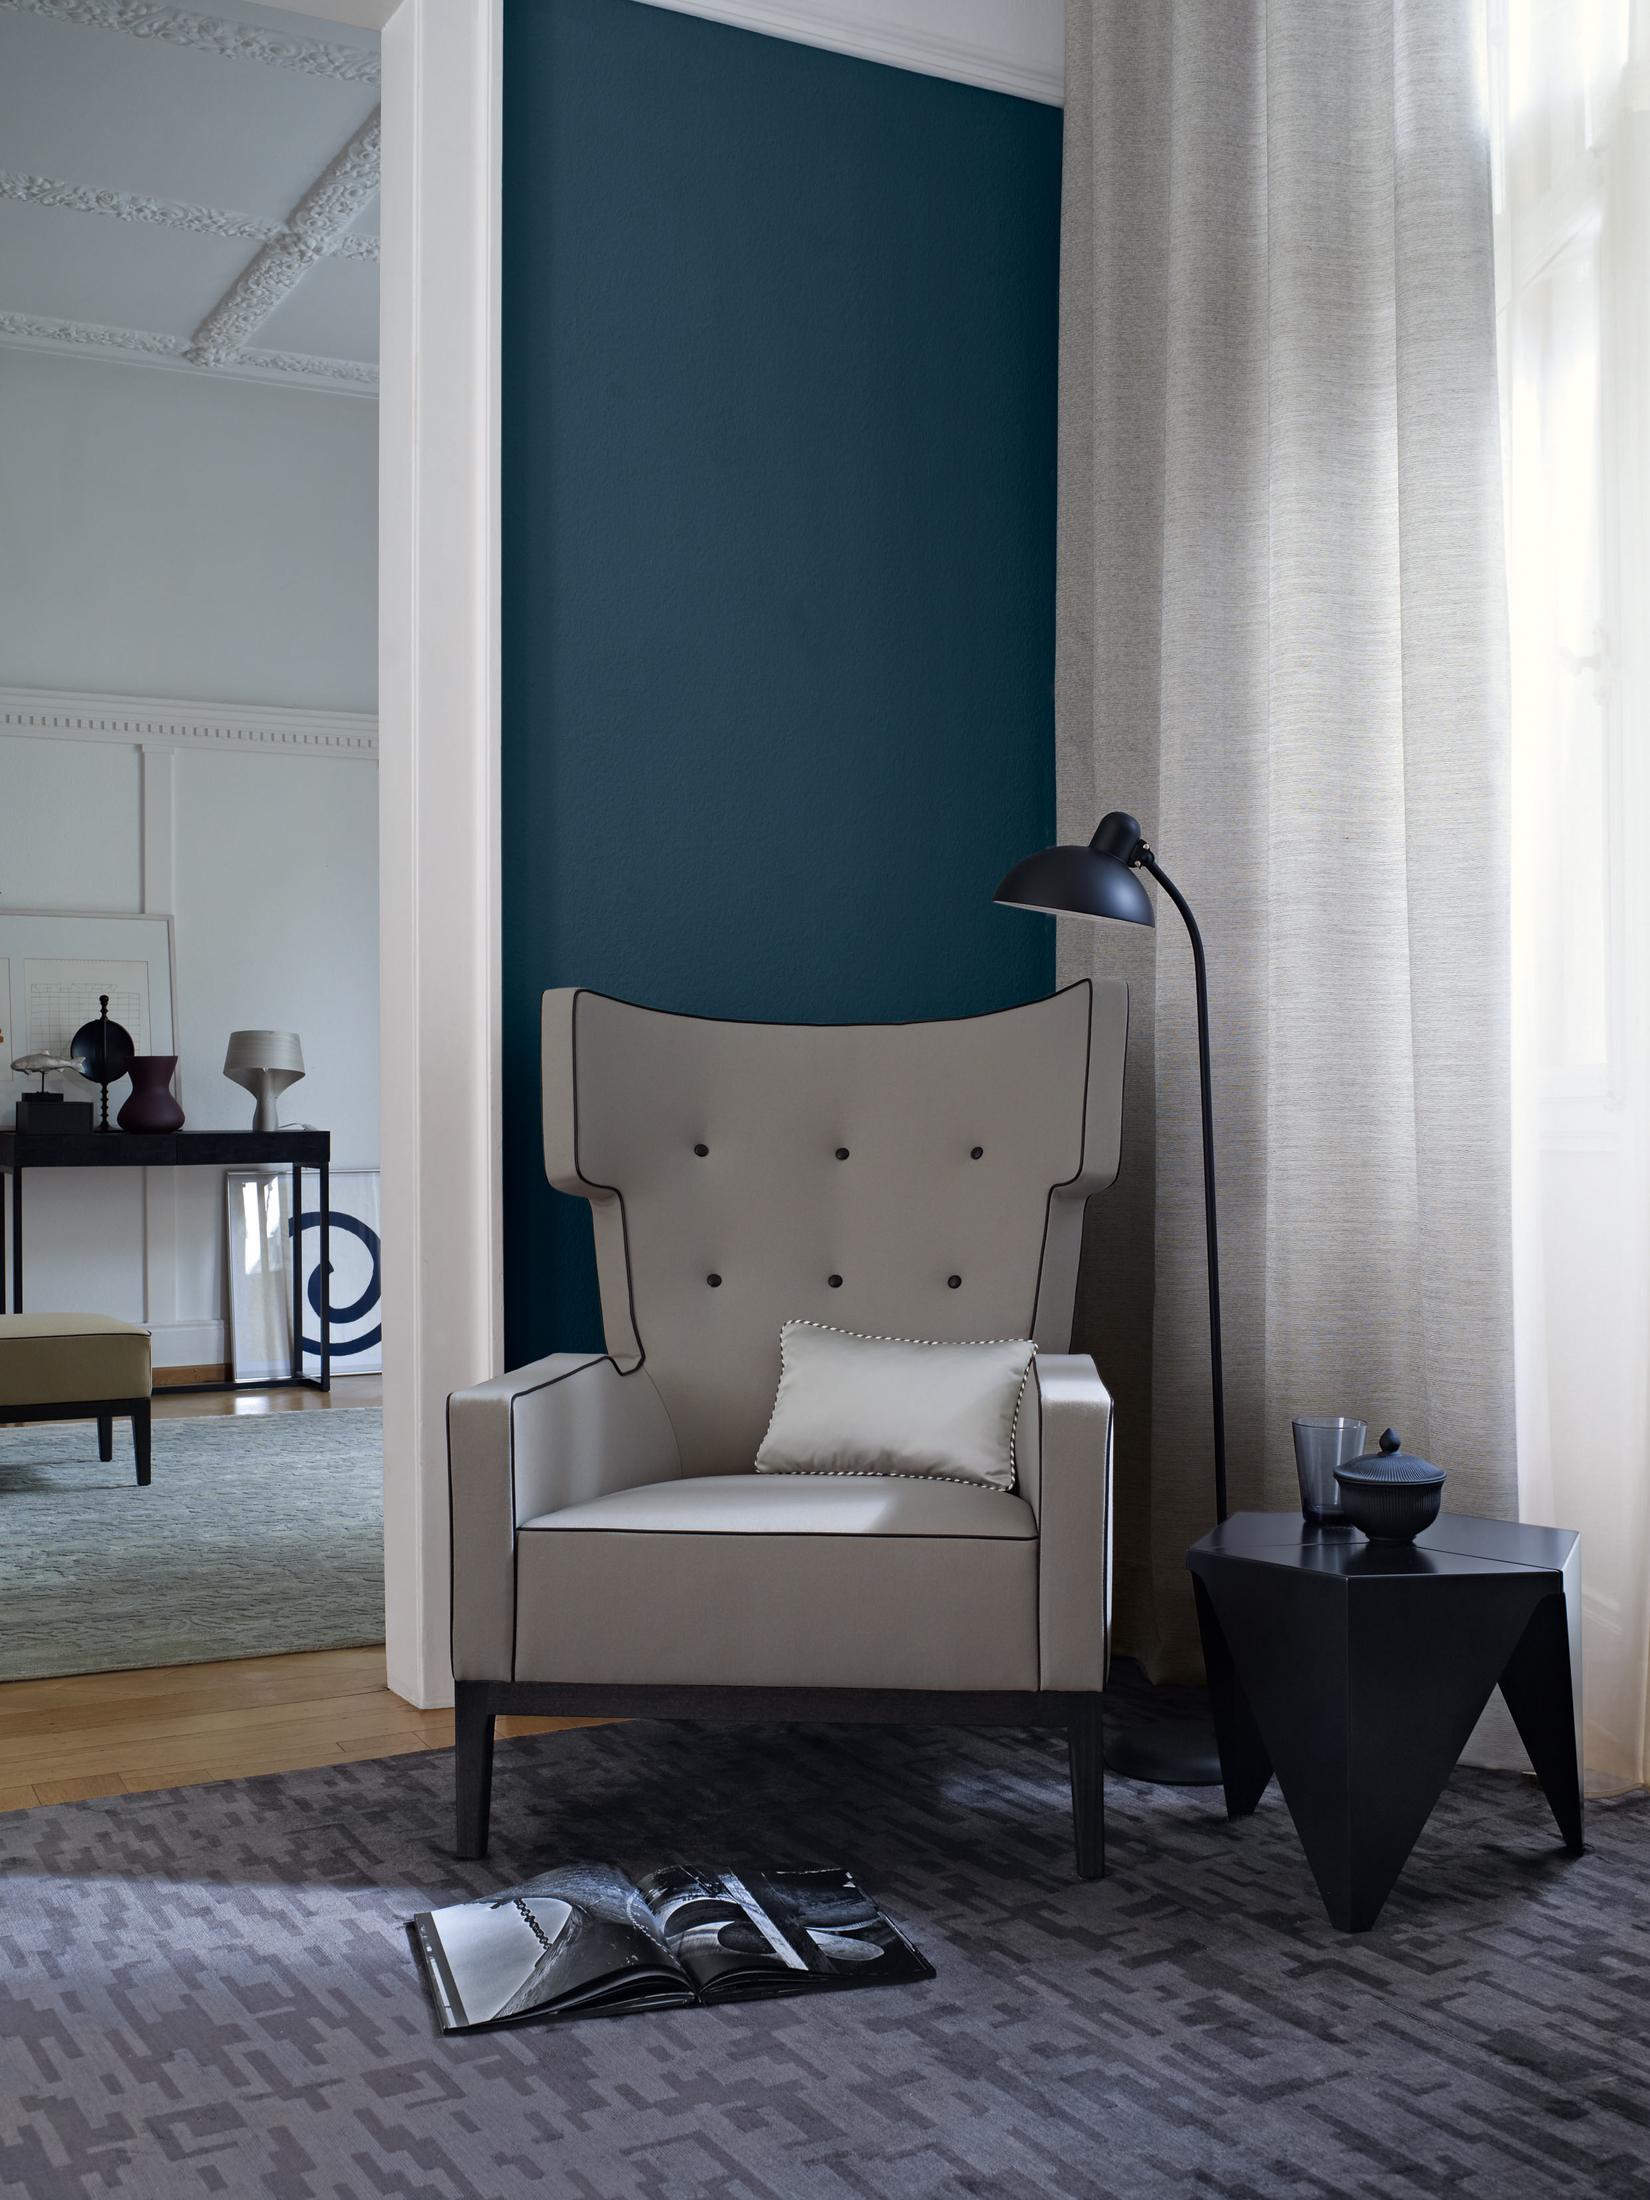 Leseecke mit grauem Sessel #stehlampe #sitzecke #leseecke #grauersessel ©Zimmer + Rohde